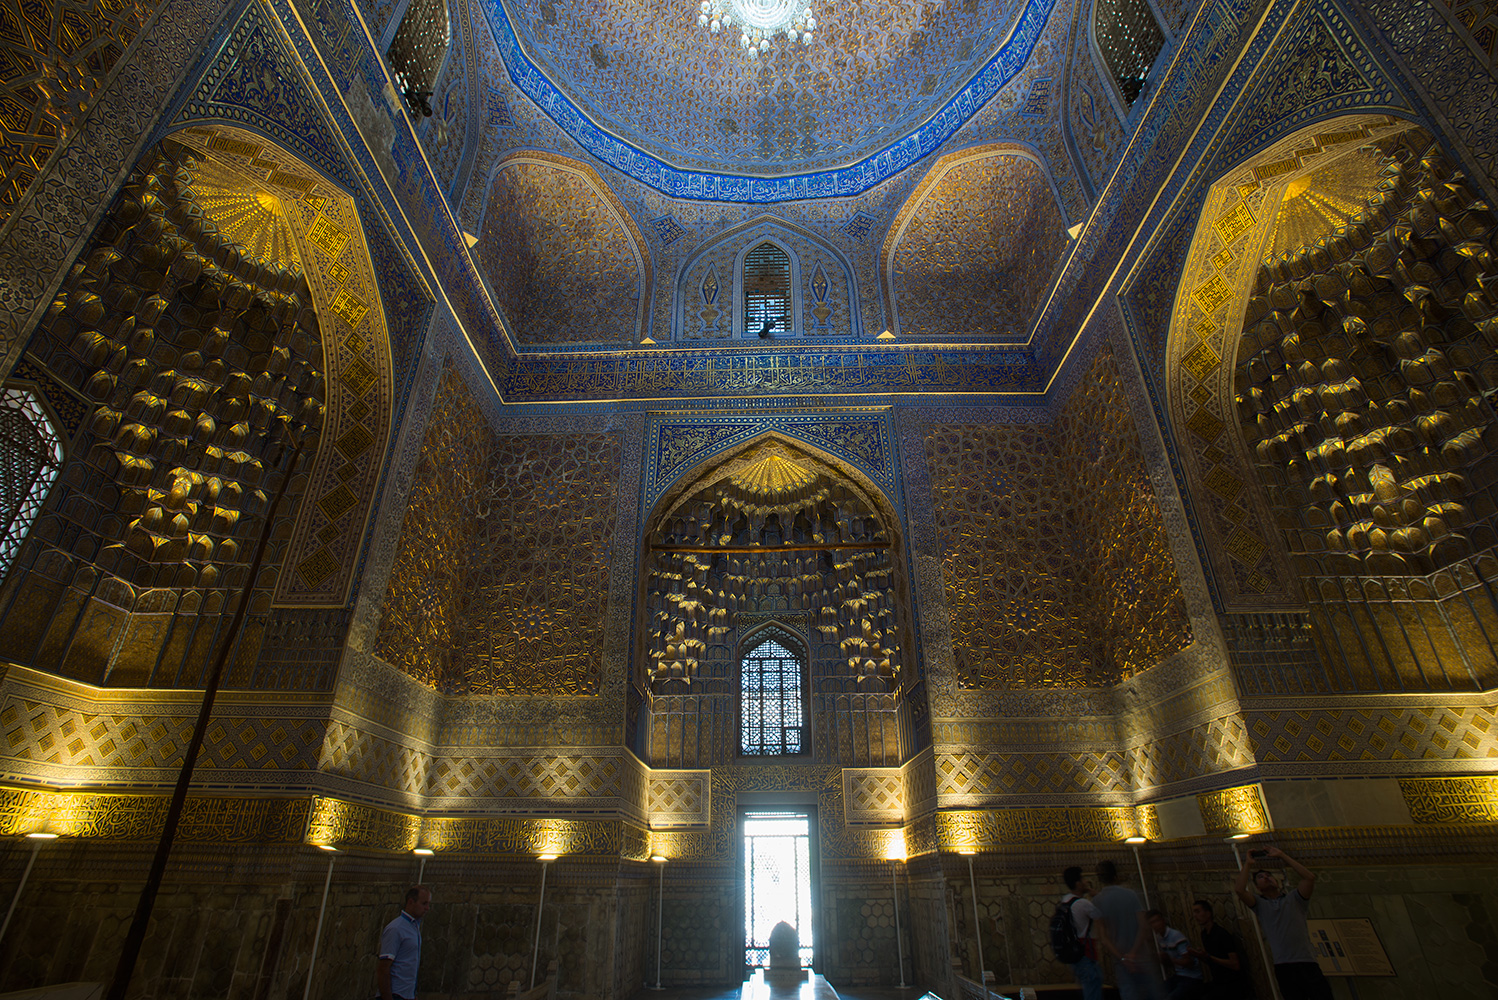 The Mausoleum of the Emir Timur